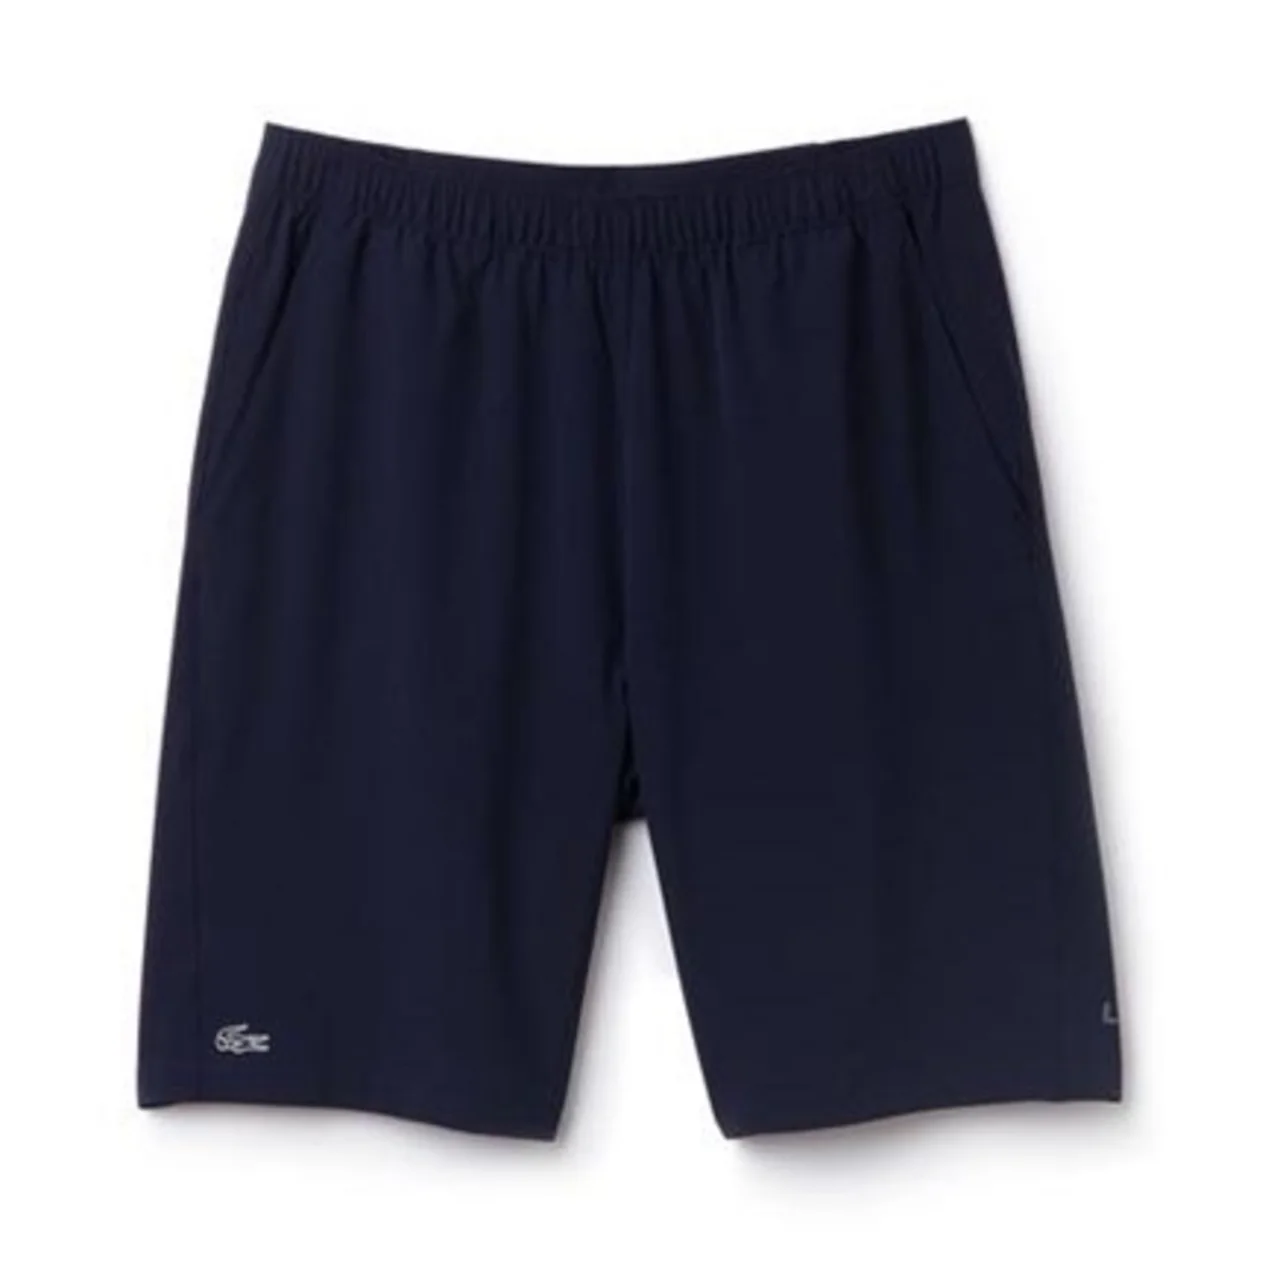 Lacoste Shorts Dark Blue Size L